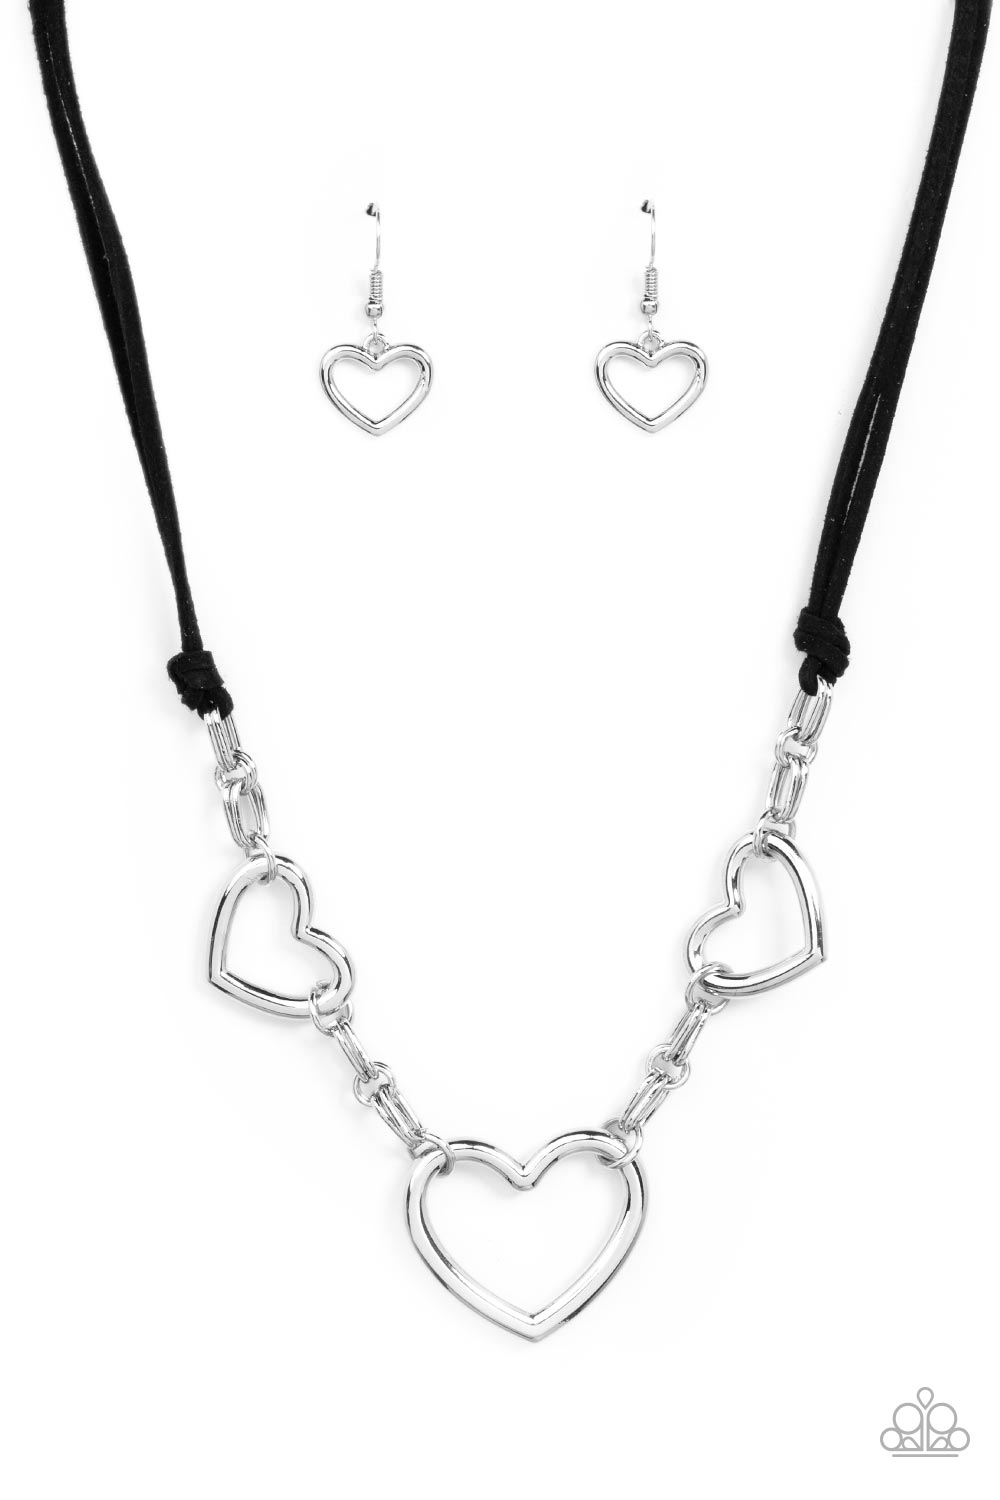 Fashionable Flirt Necklace (Black, Pink)